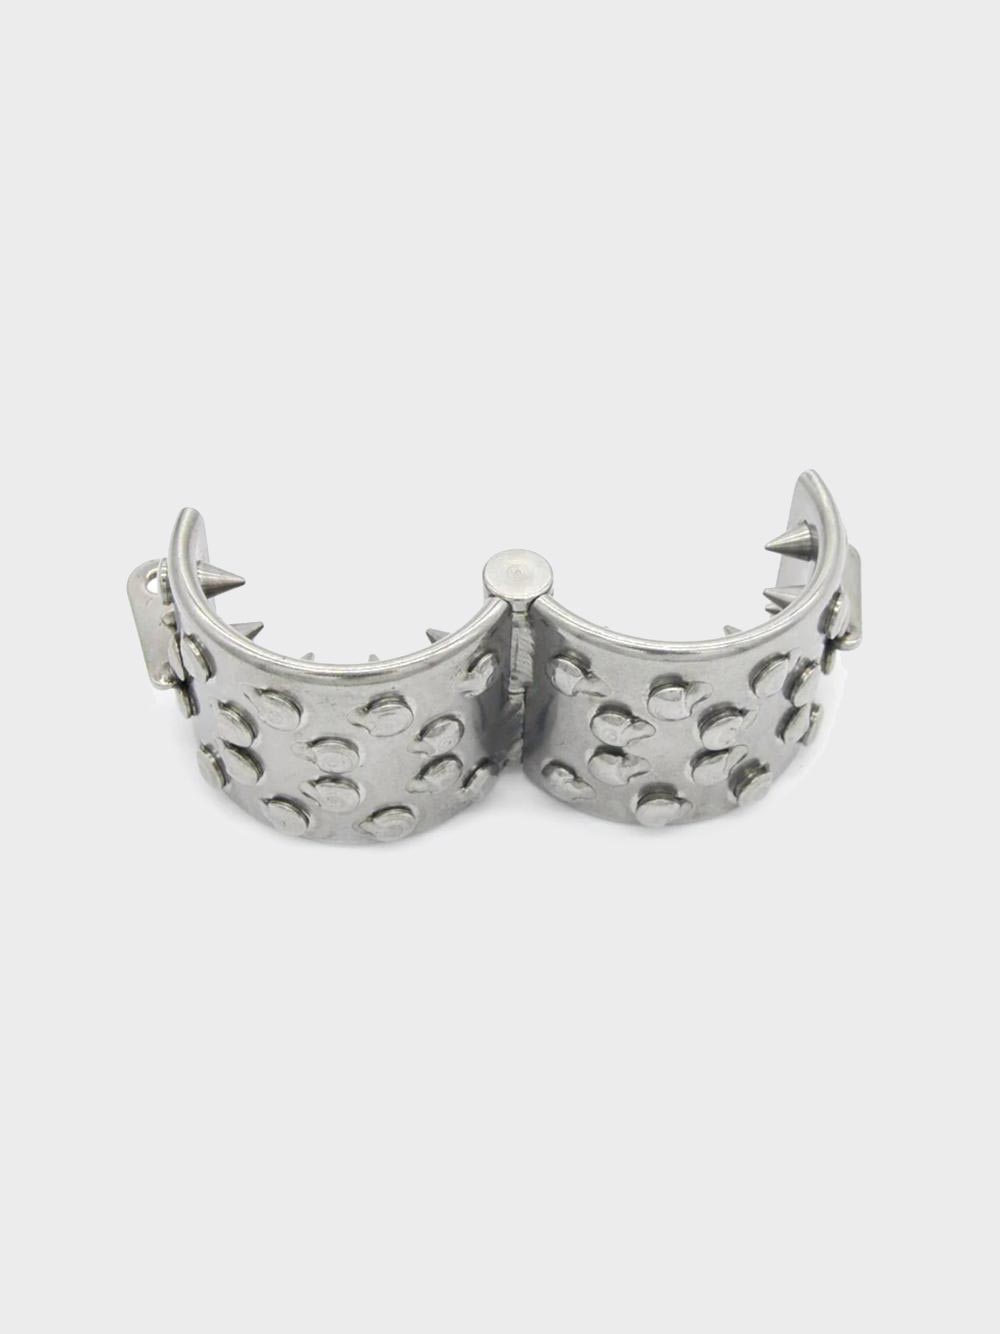 Kalis Teeth cockring with steel spikes